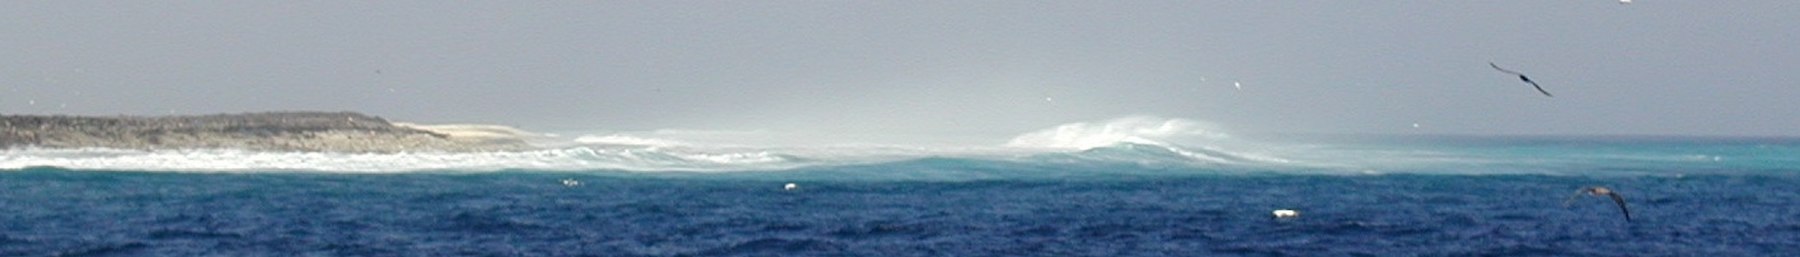 WV afiş Clipperton Waves.jpg